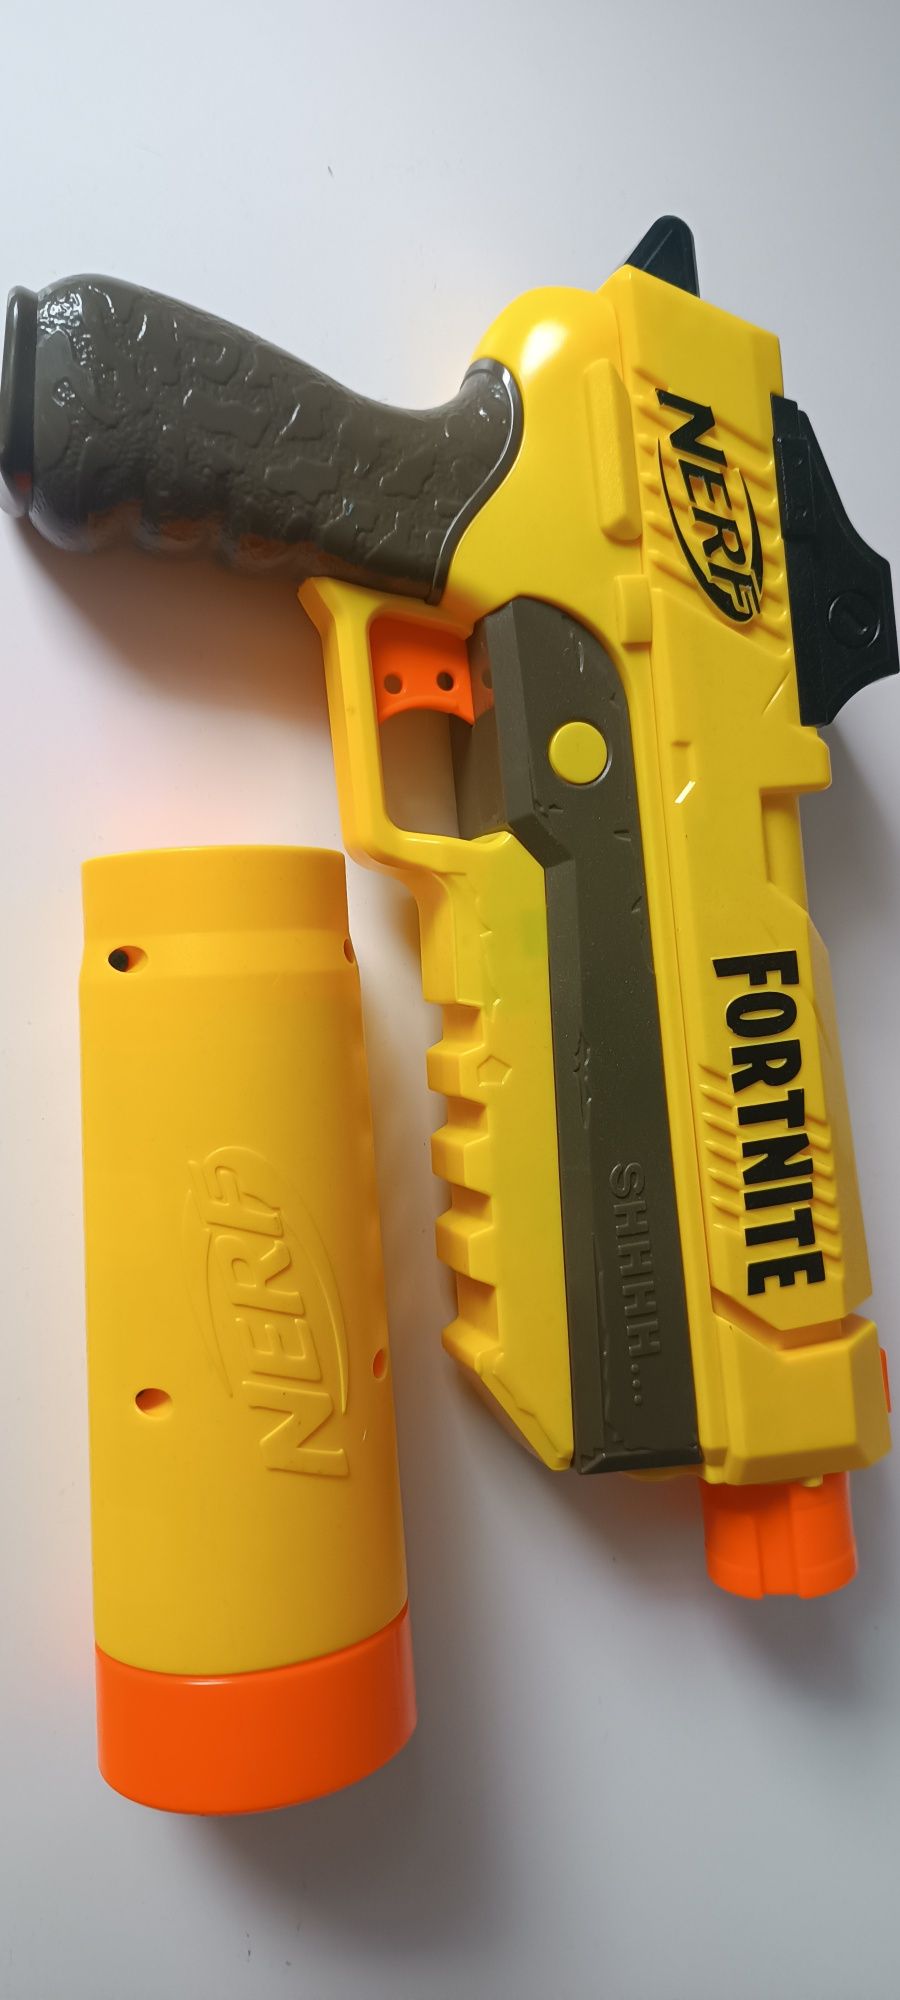 NERF  Forntnite pistolet żółty